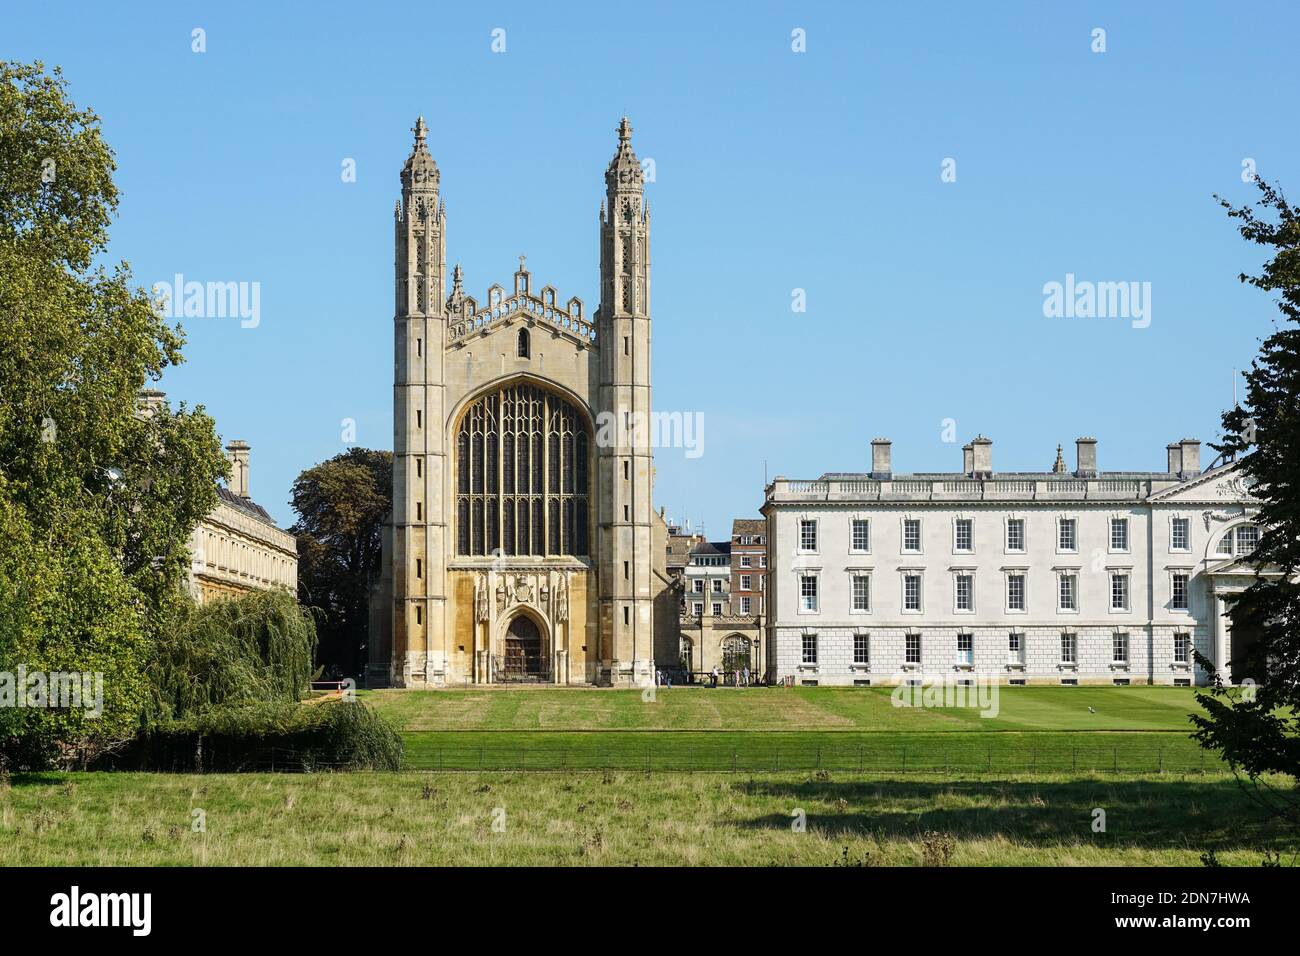 King's College Chapel in der University of Cambridge, Cambridge Cambridgeshire England Vereinigtes Königreich Großbritannien Stockfoto